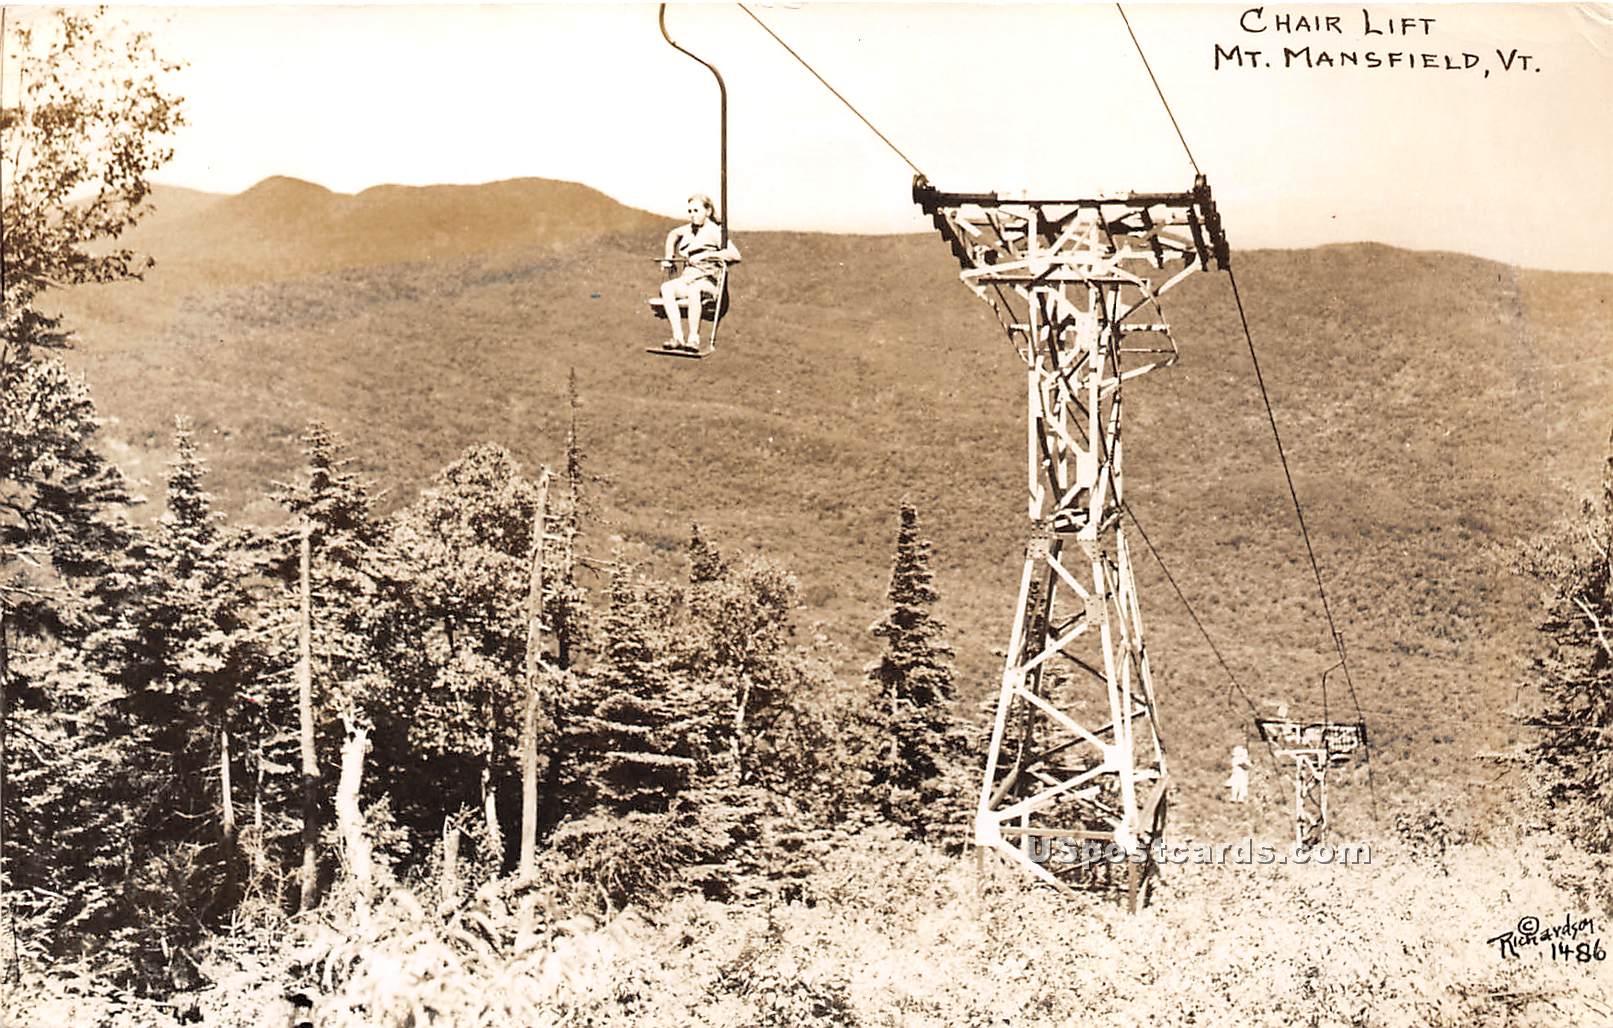 Chair Lift - Mount Mansfield, Vermont VT Postcard